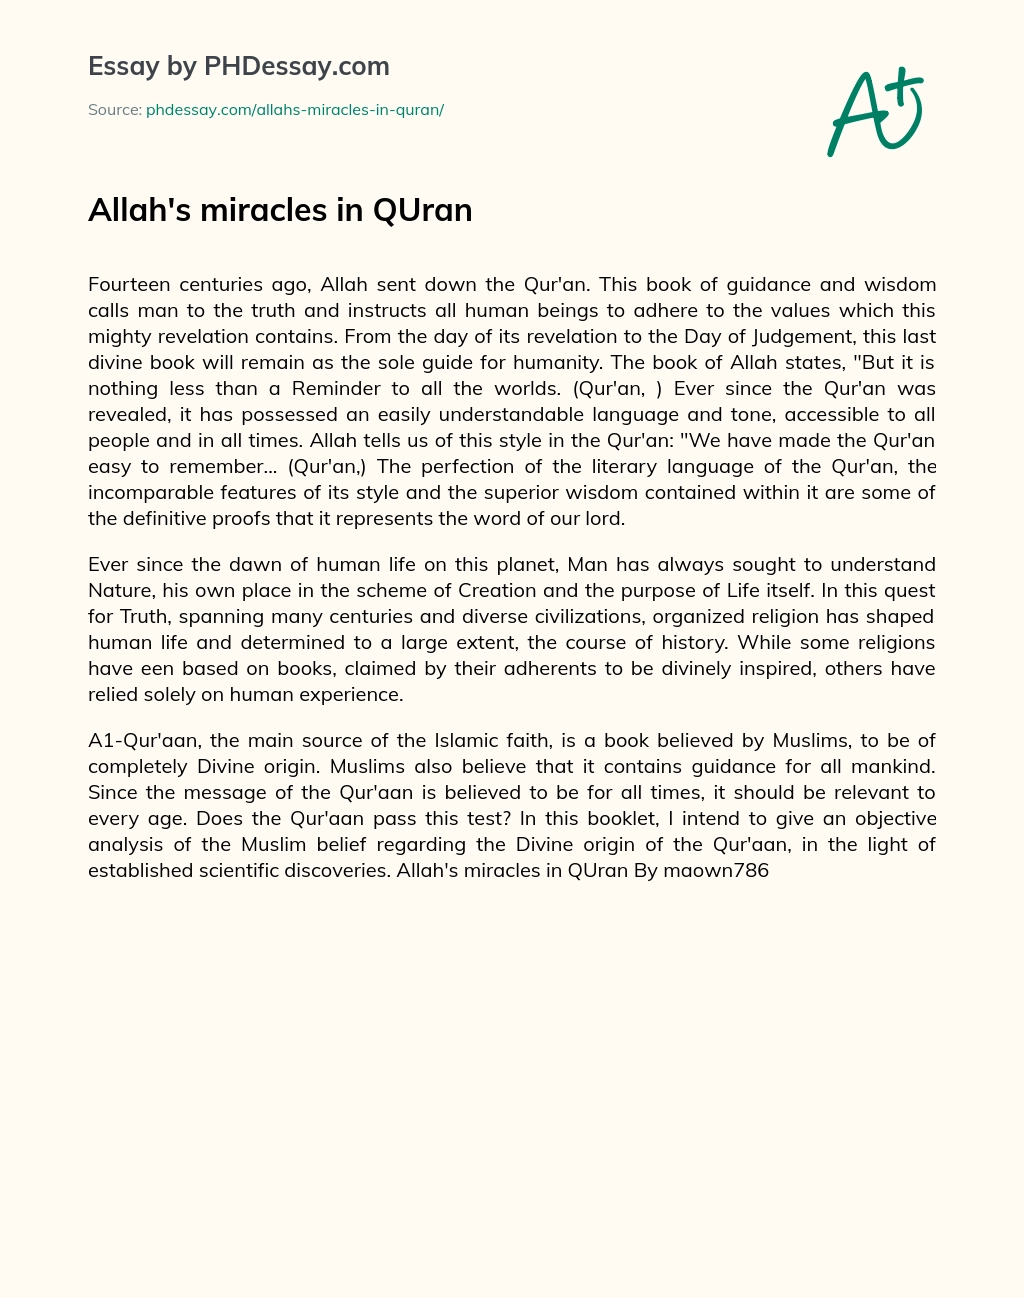 Allah’s miracles in QUran essay